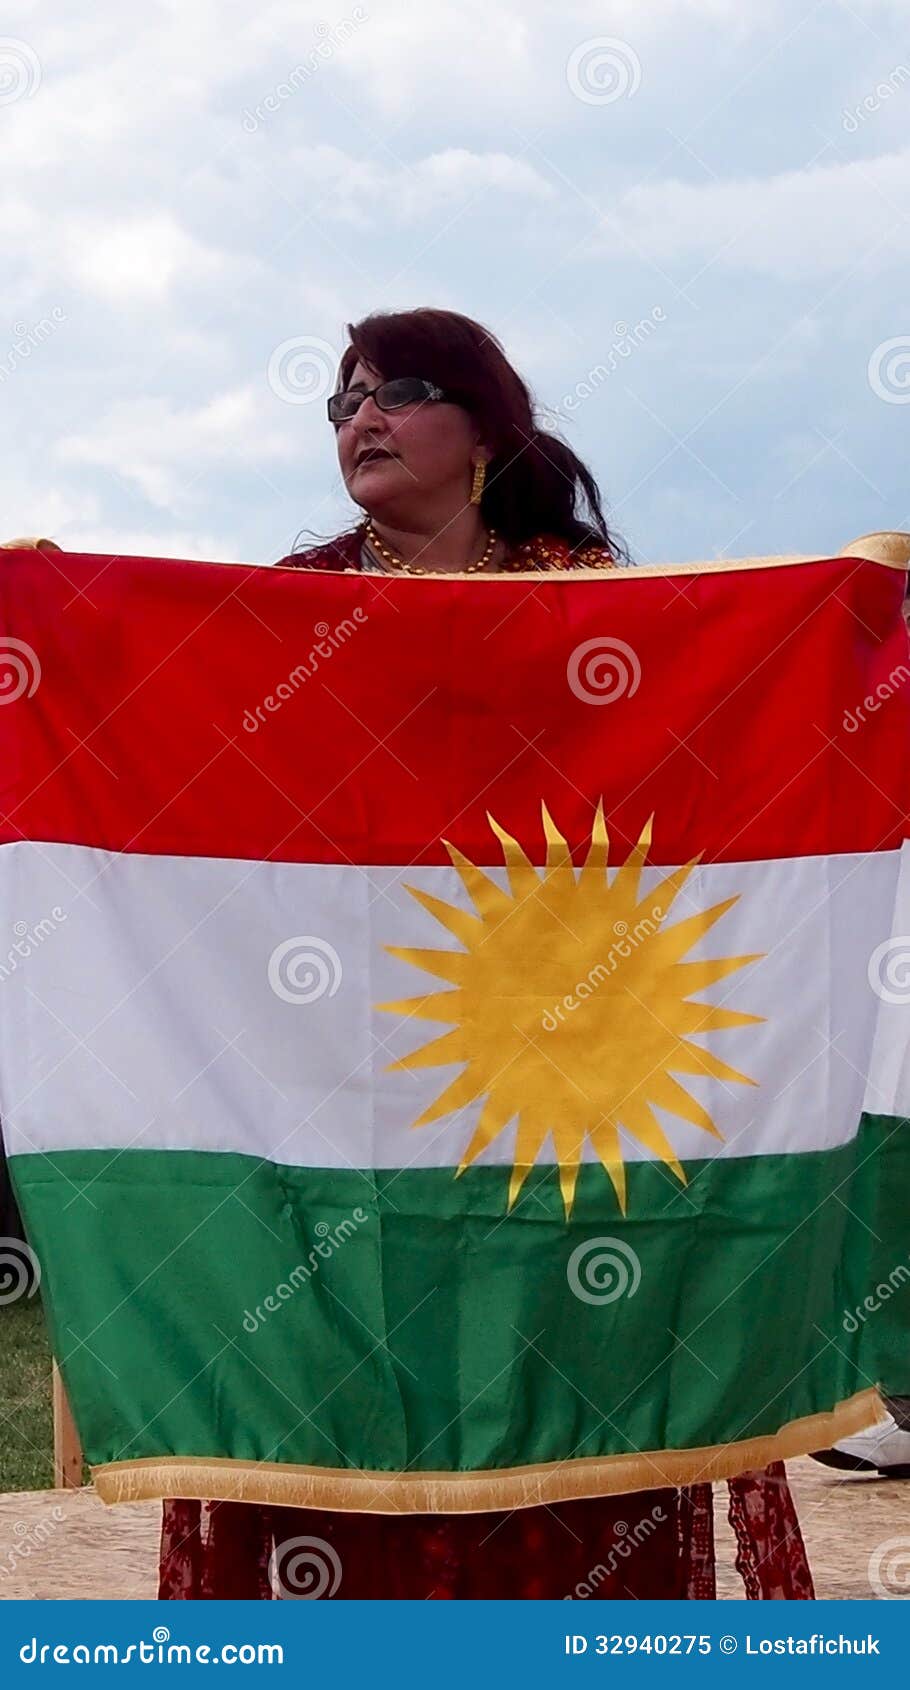 Kurdistan Flag Images  Browse 1668 Stock Photos Vectors and Video   Adobe Stock